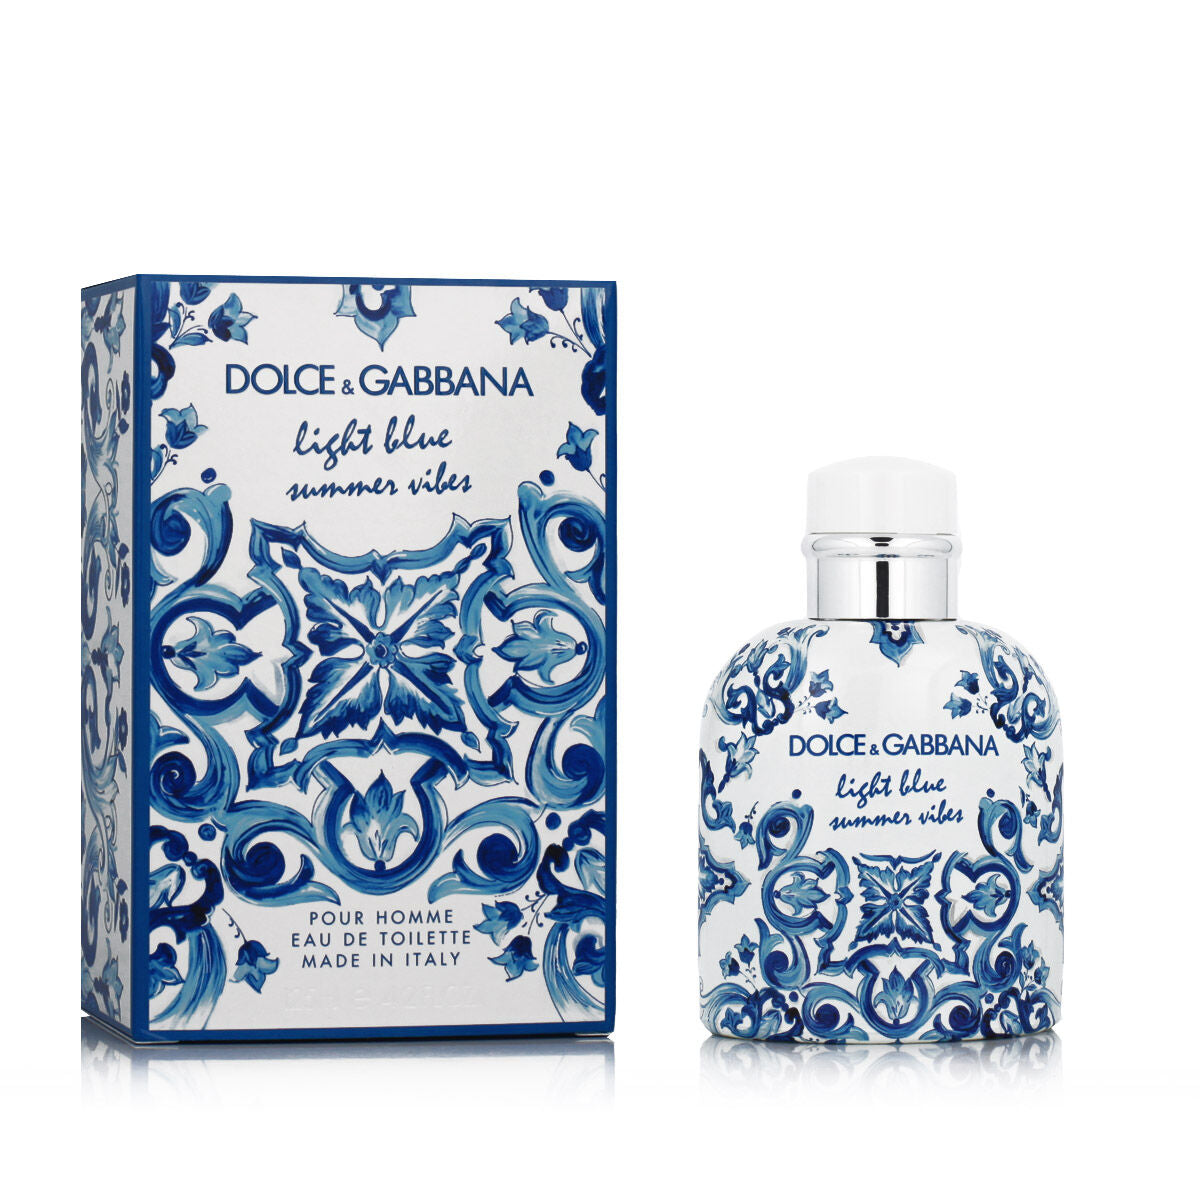 Herenparfum Dolce & Gabbana EDT Light Blue Summer vibes 125 ml